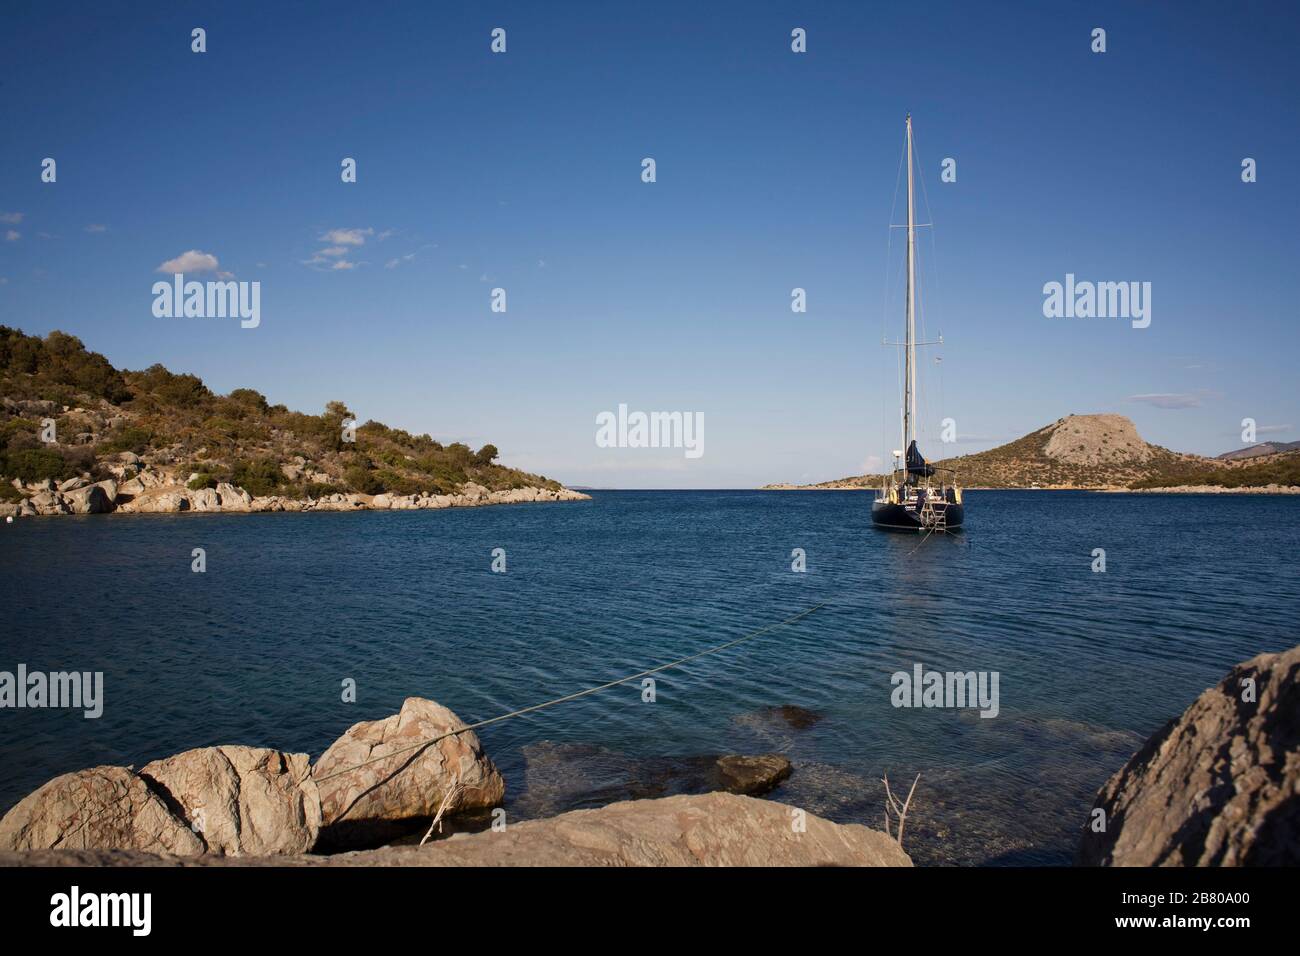 Egean islands and Peleponese peninsula. Egean Sea, Mediterranean. Greece (Hellas), Europe. Stock Photo